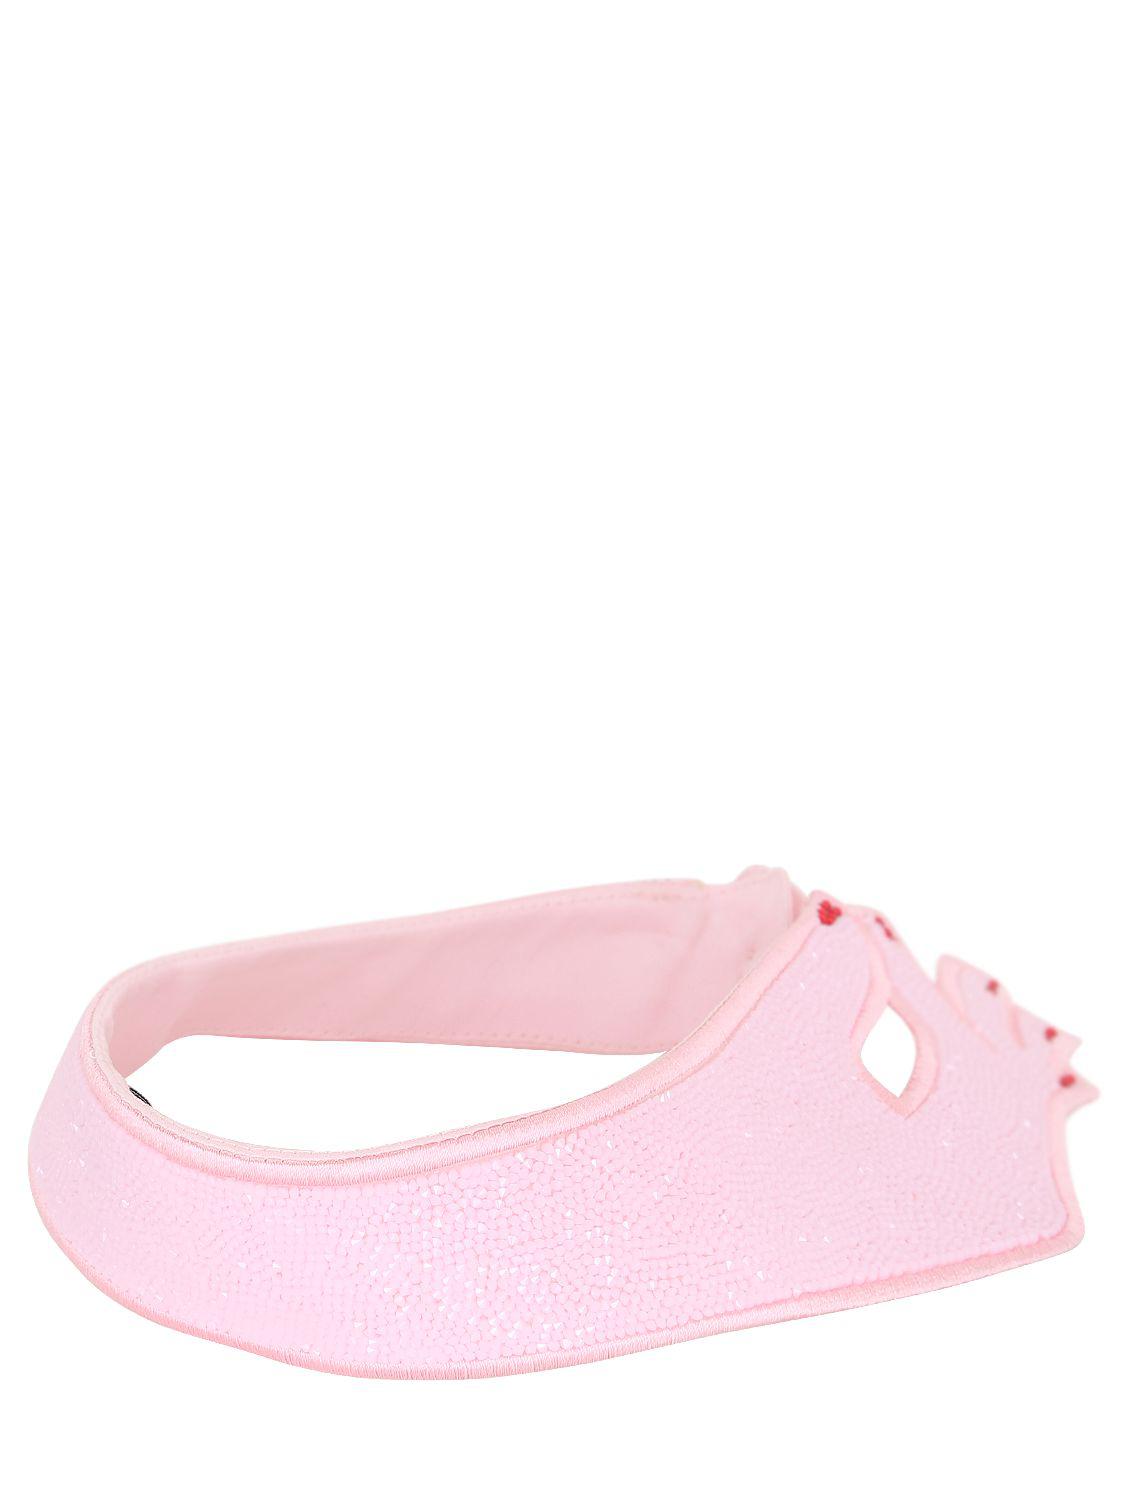 Vivetta Swarovski Crystal Hands Collar in Pink - Lyst